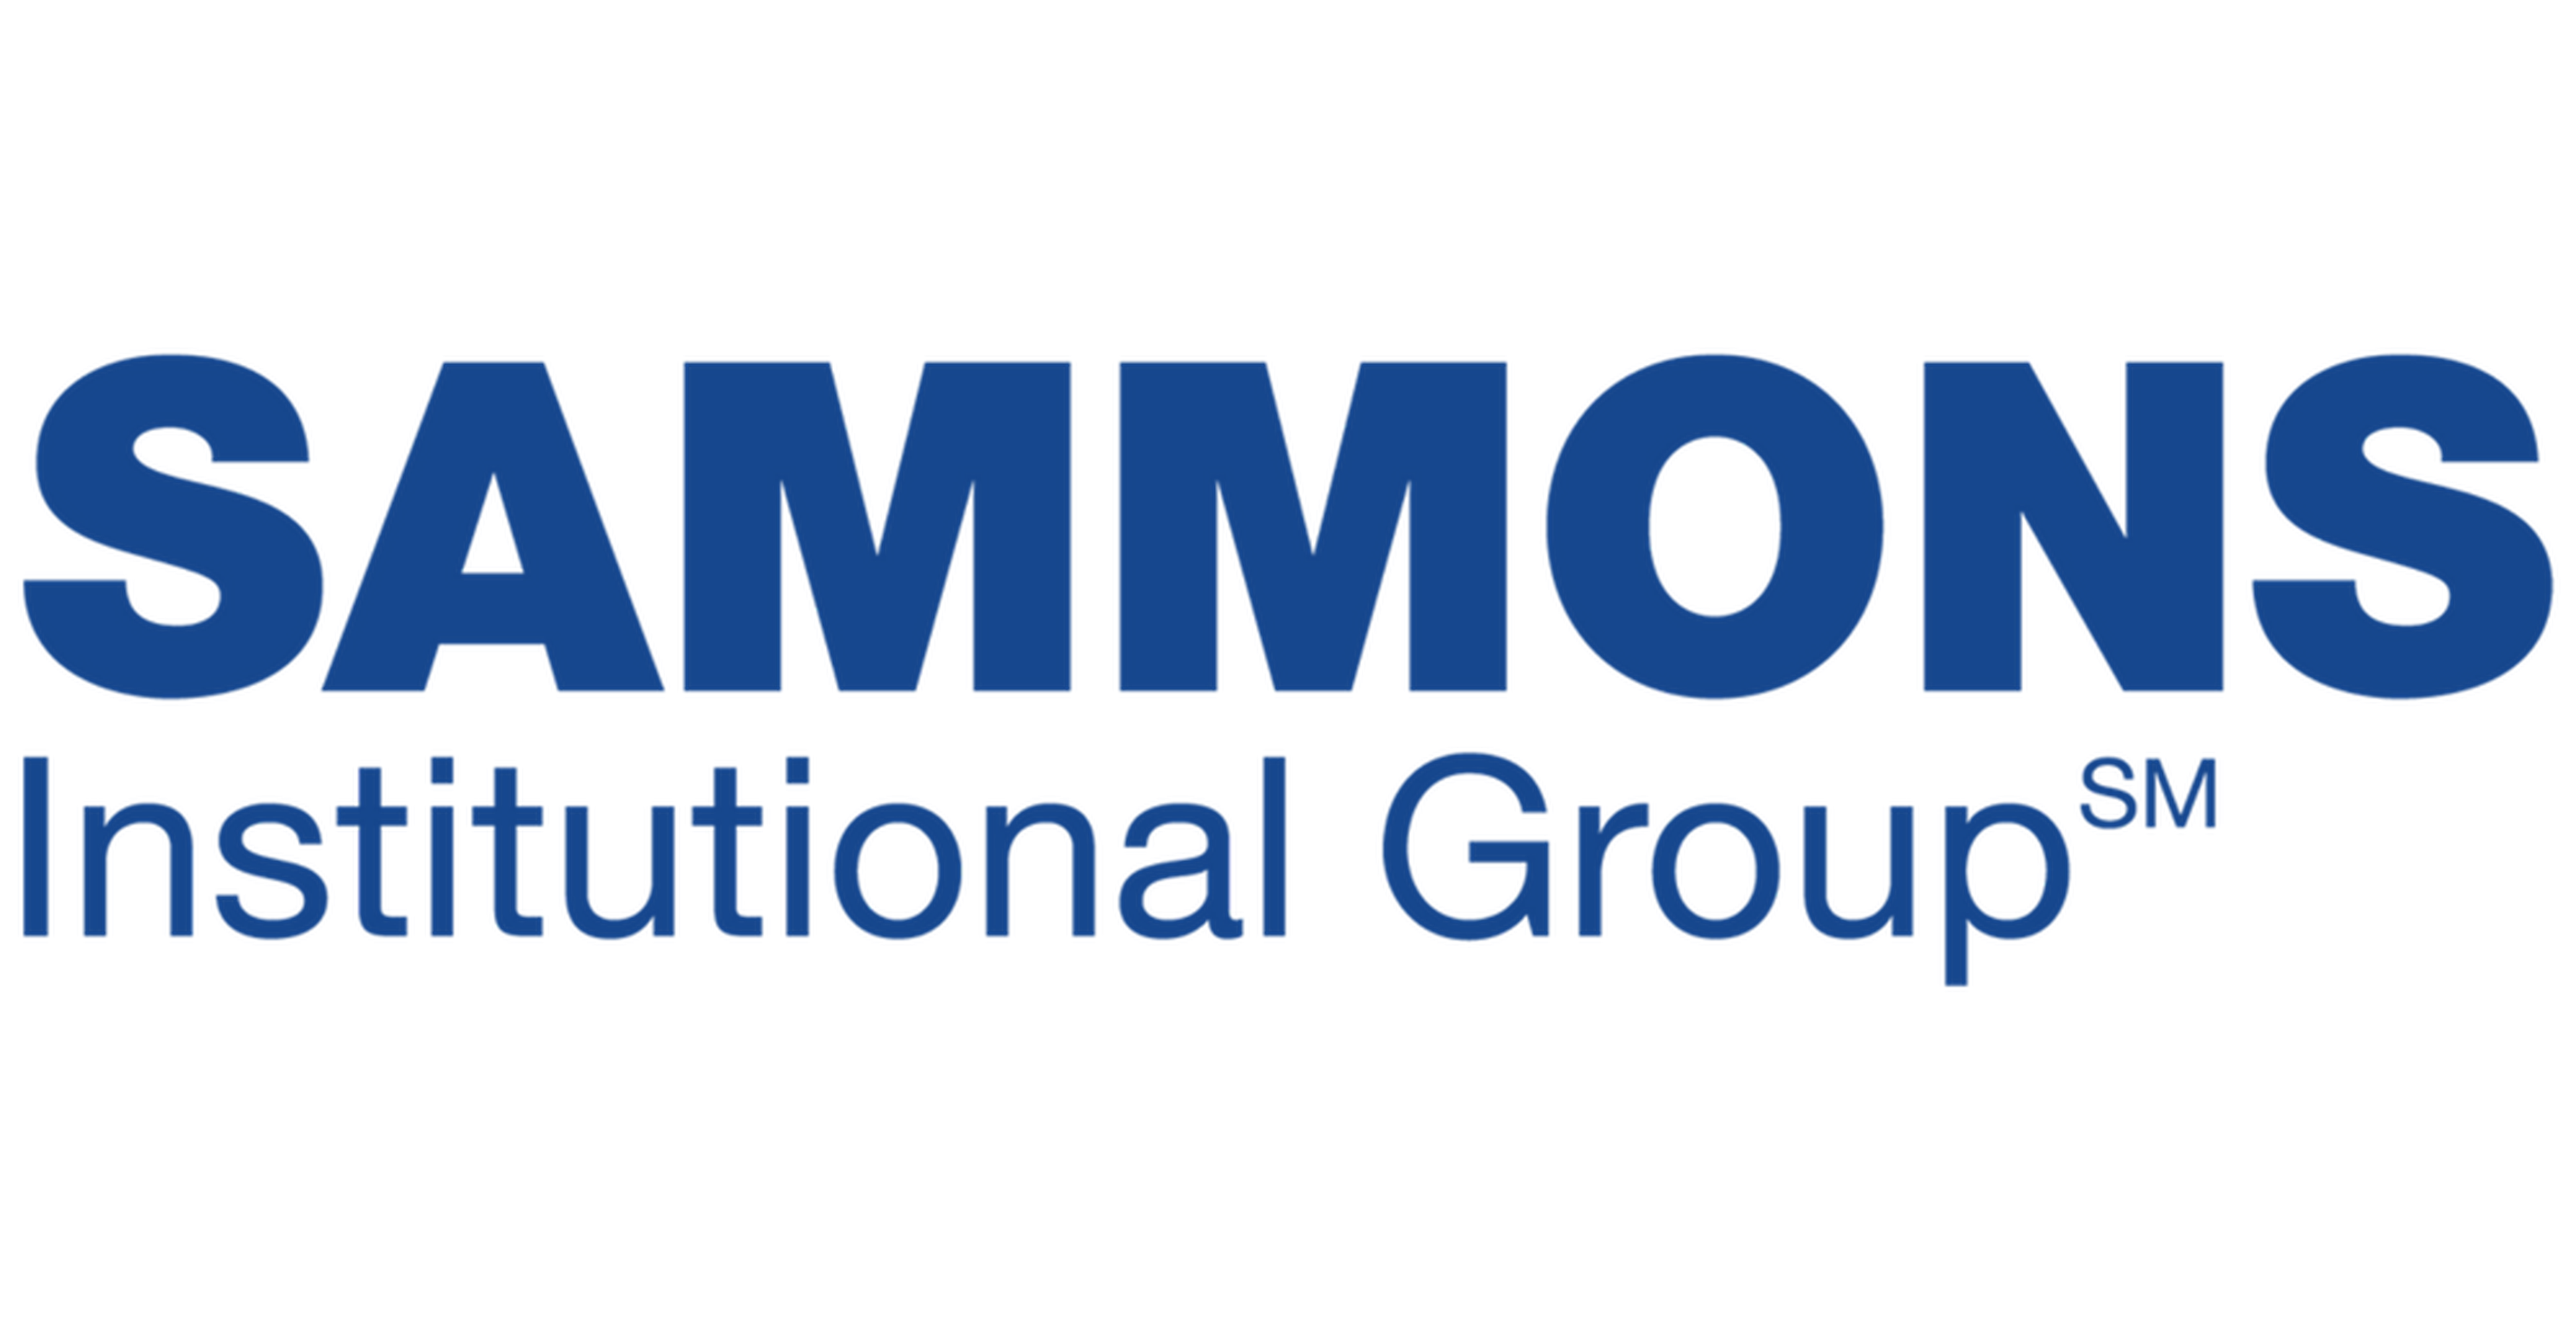 Sammons financial group